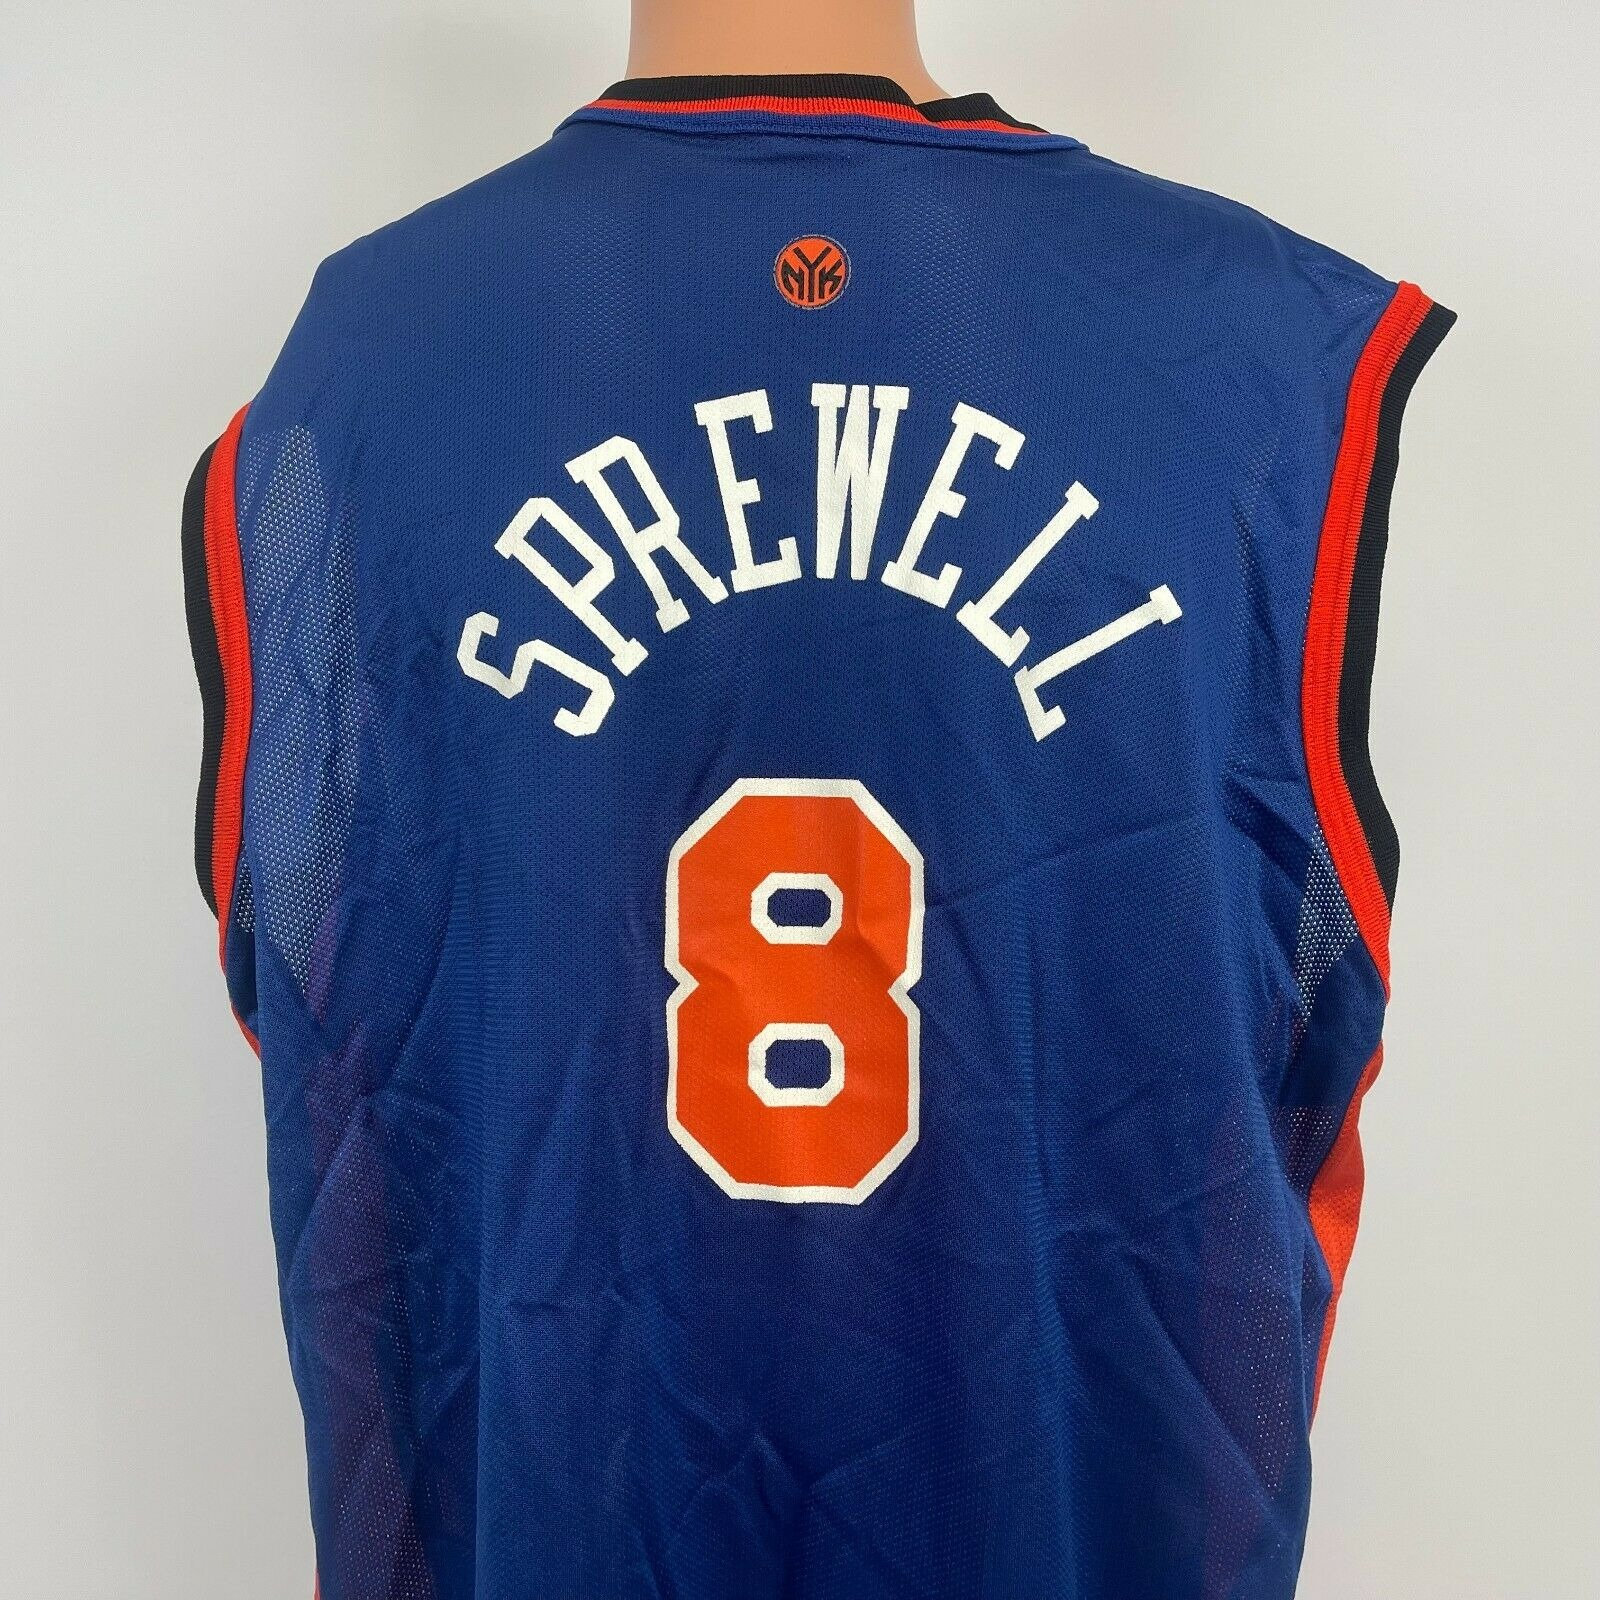 Champion Latrell Sprewell New York Knicks Road Replica Jersey